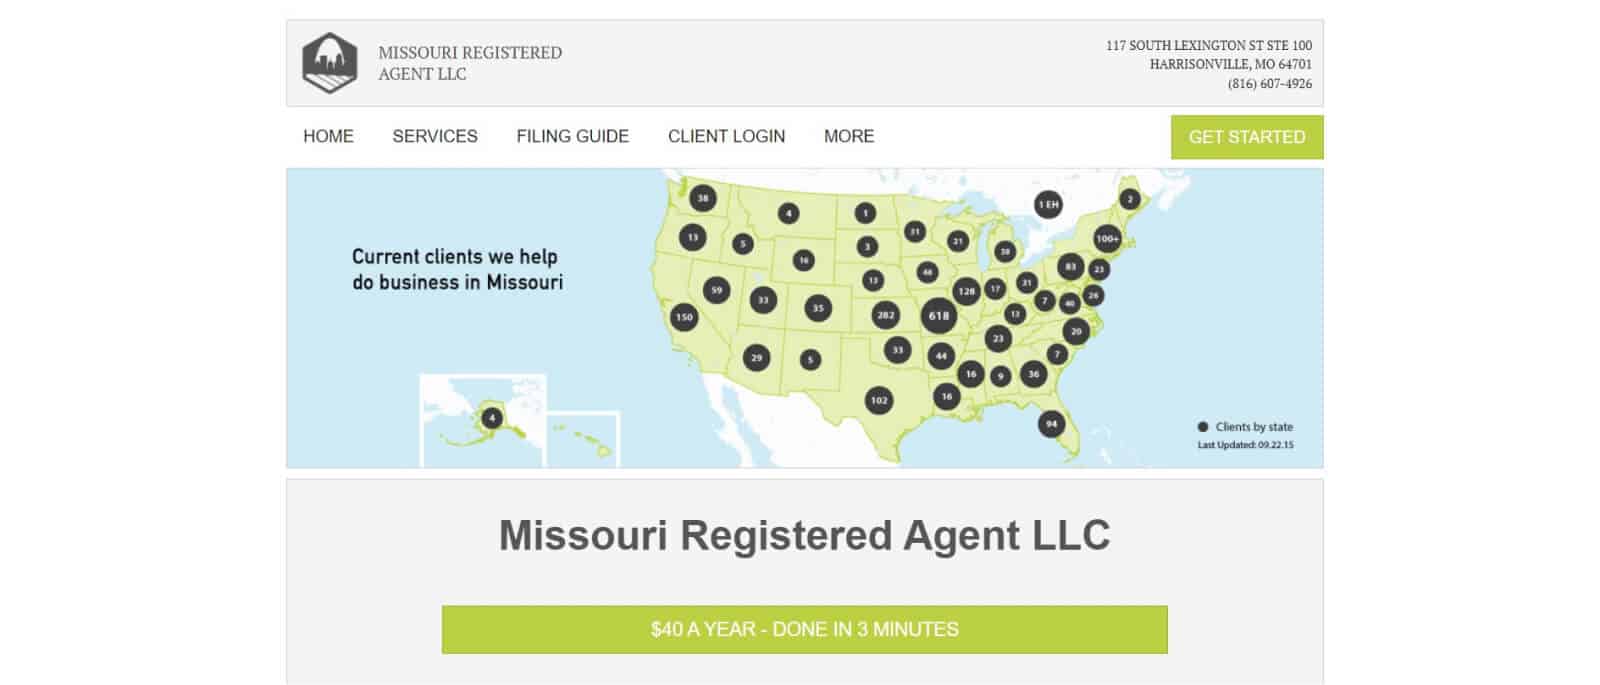 Missouri Registered Agent LLC